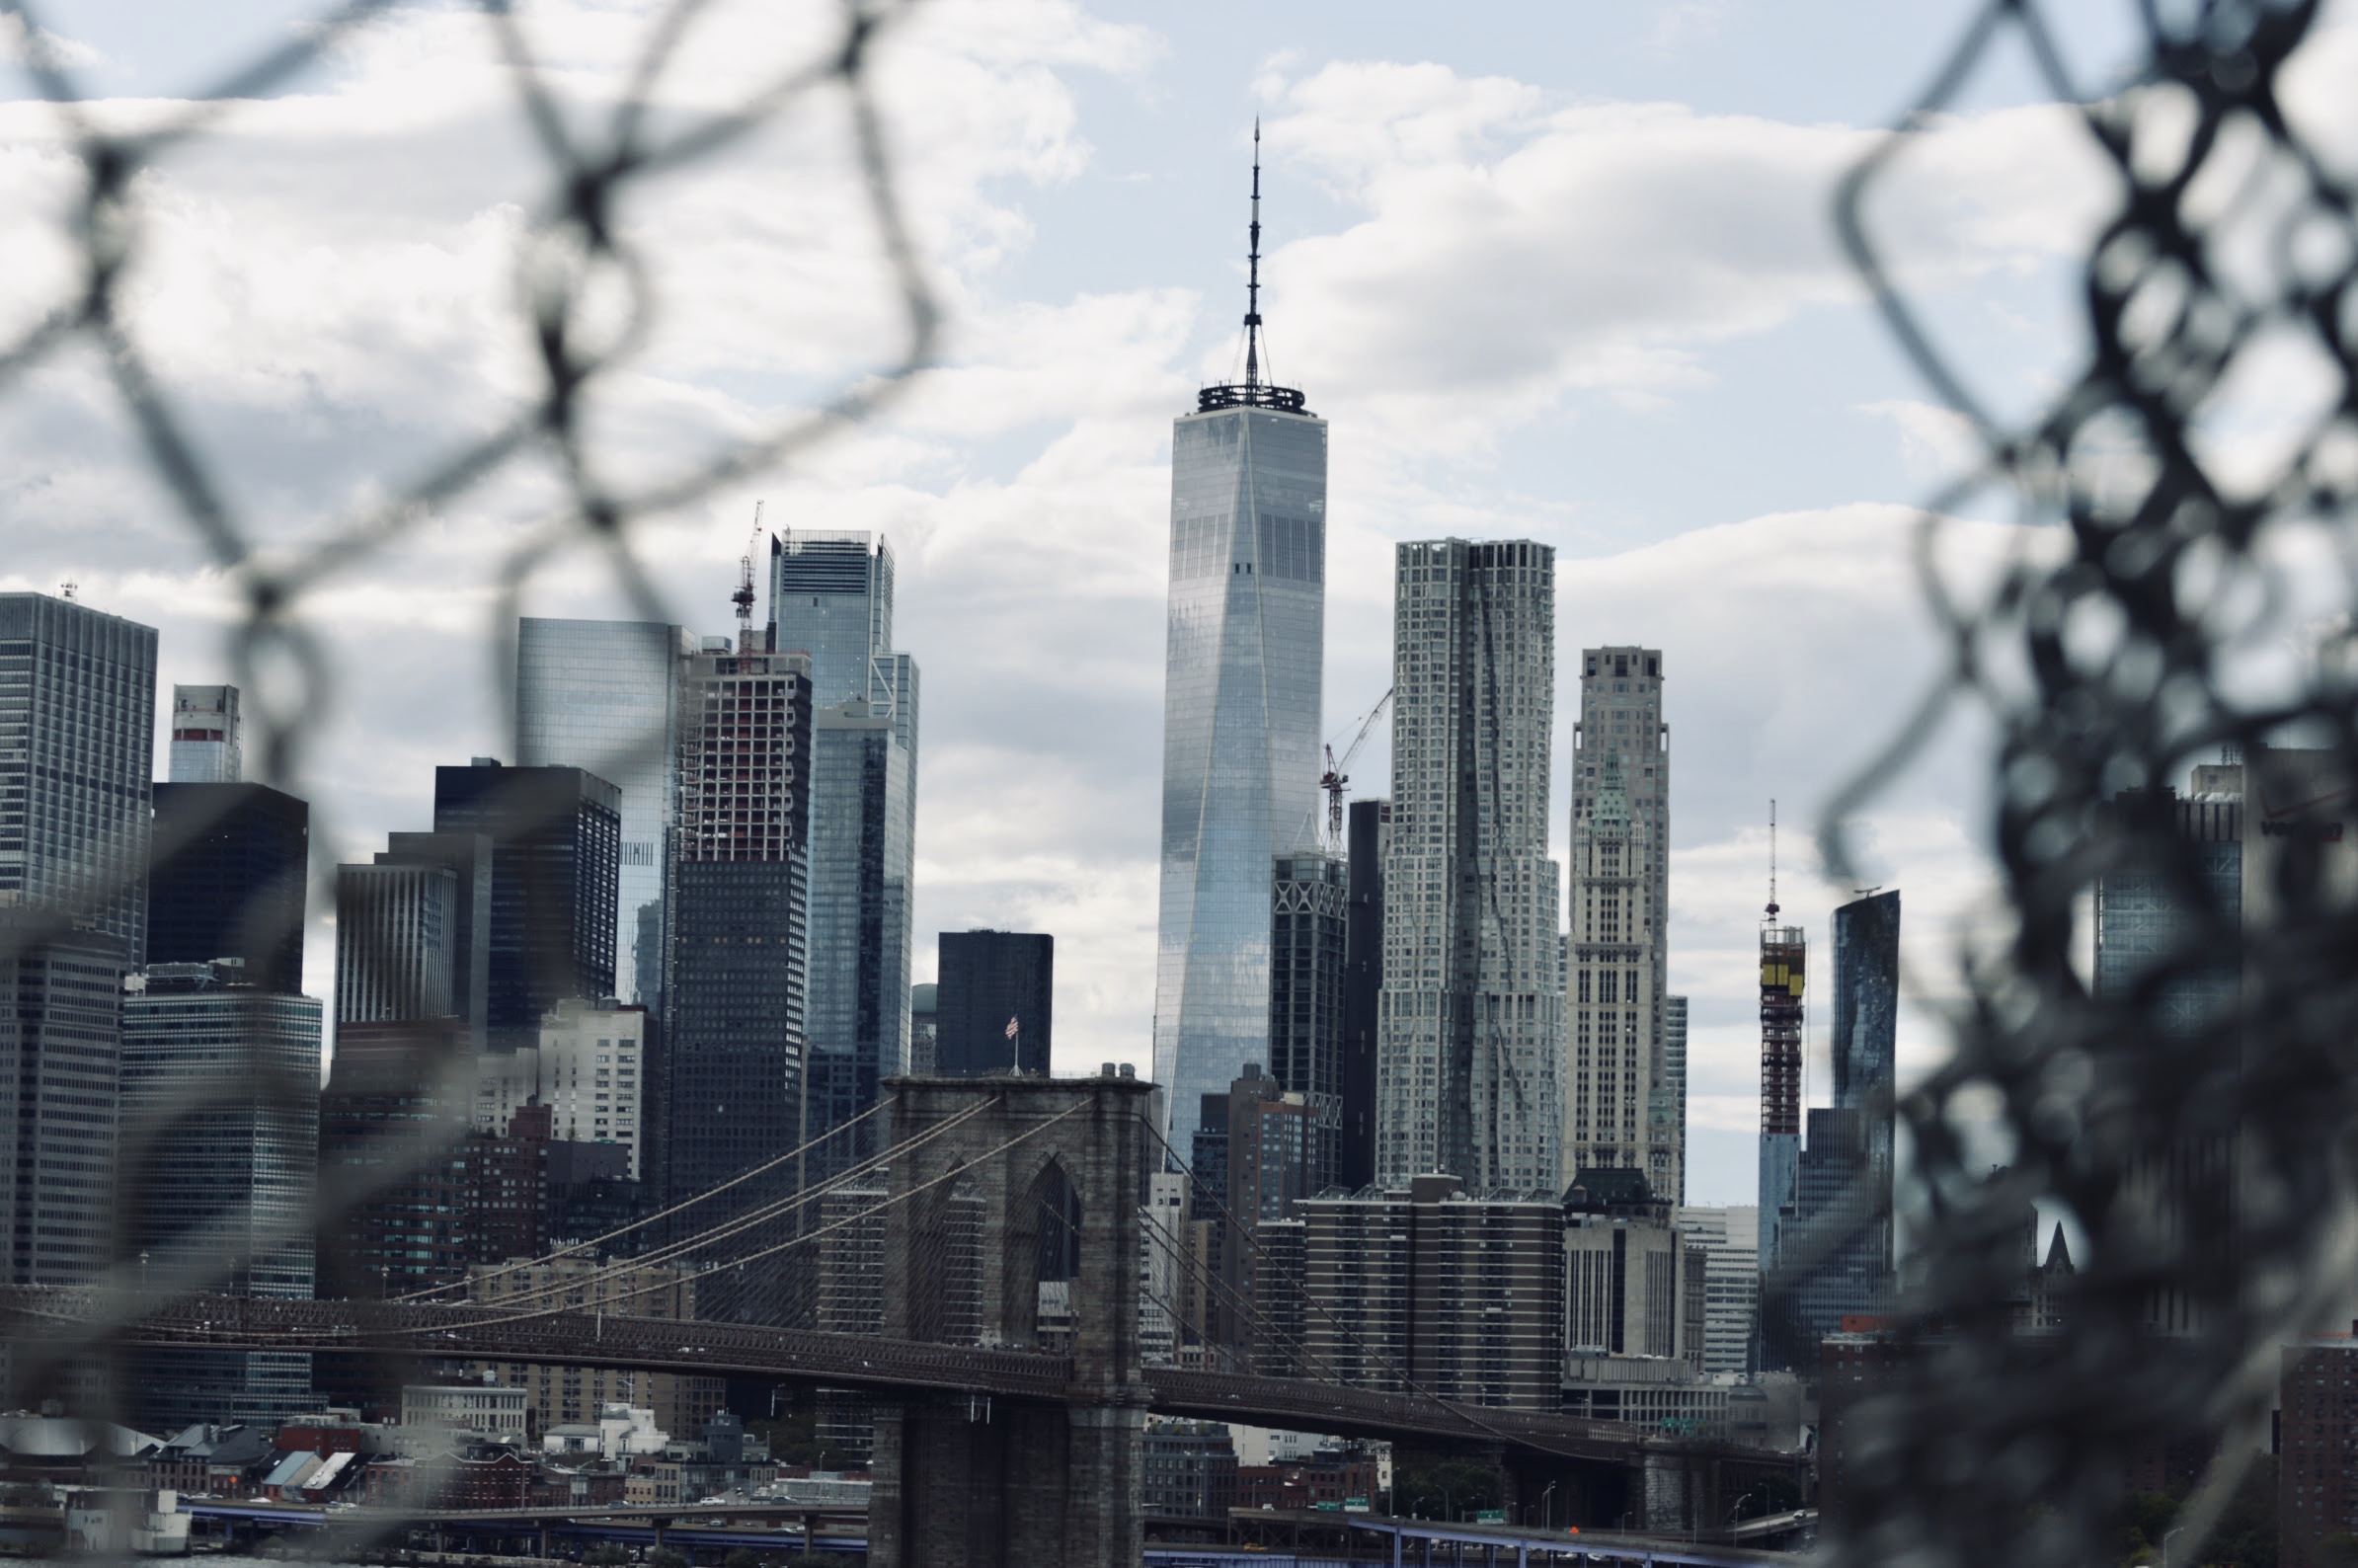 New York City skyline seen from a broken fence